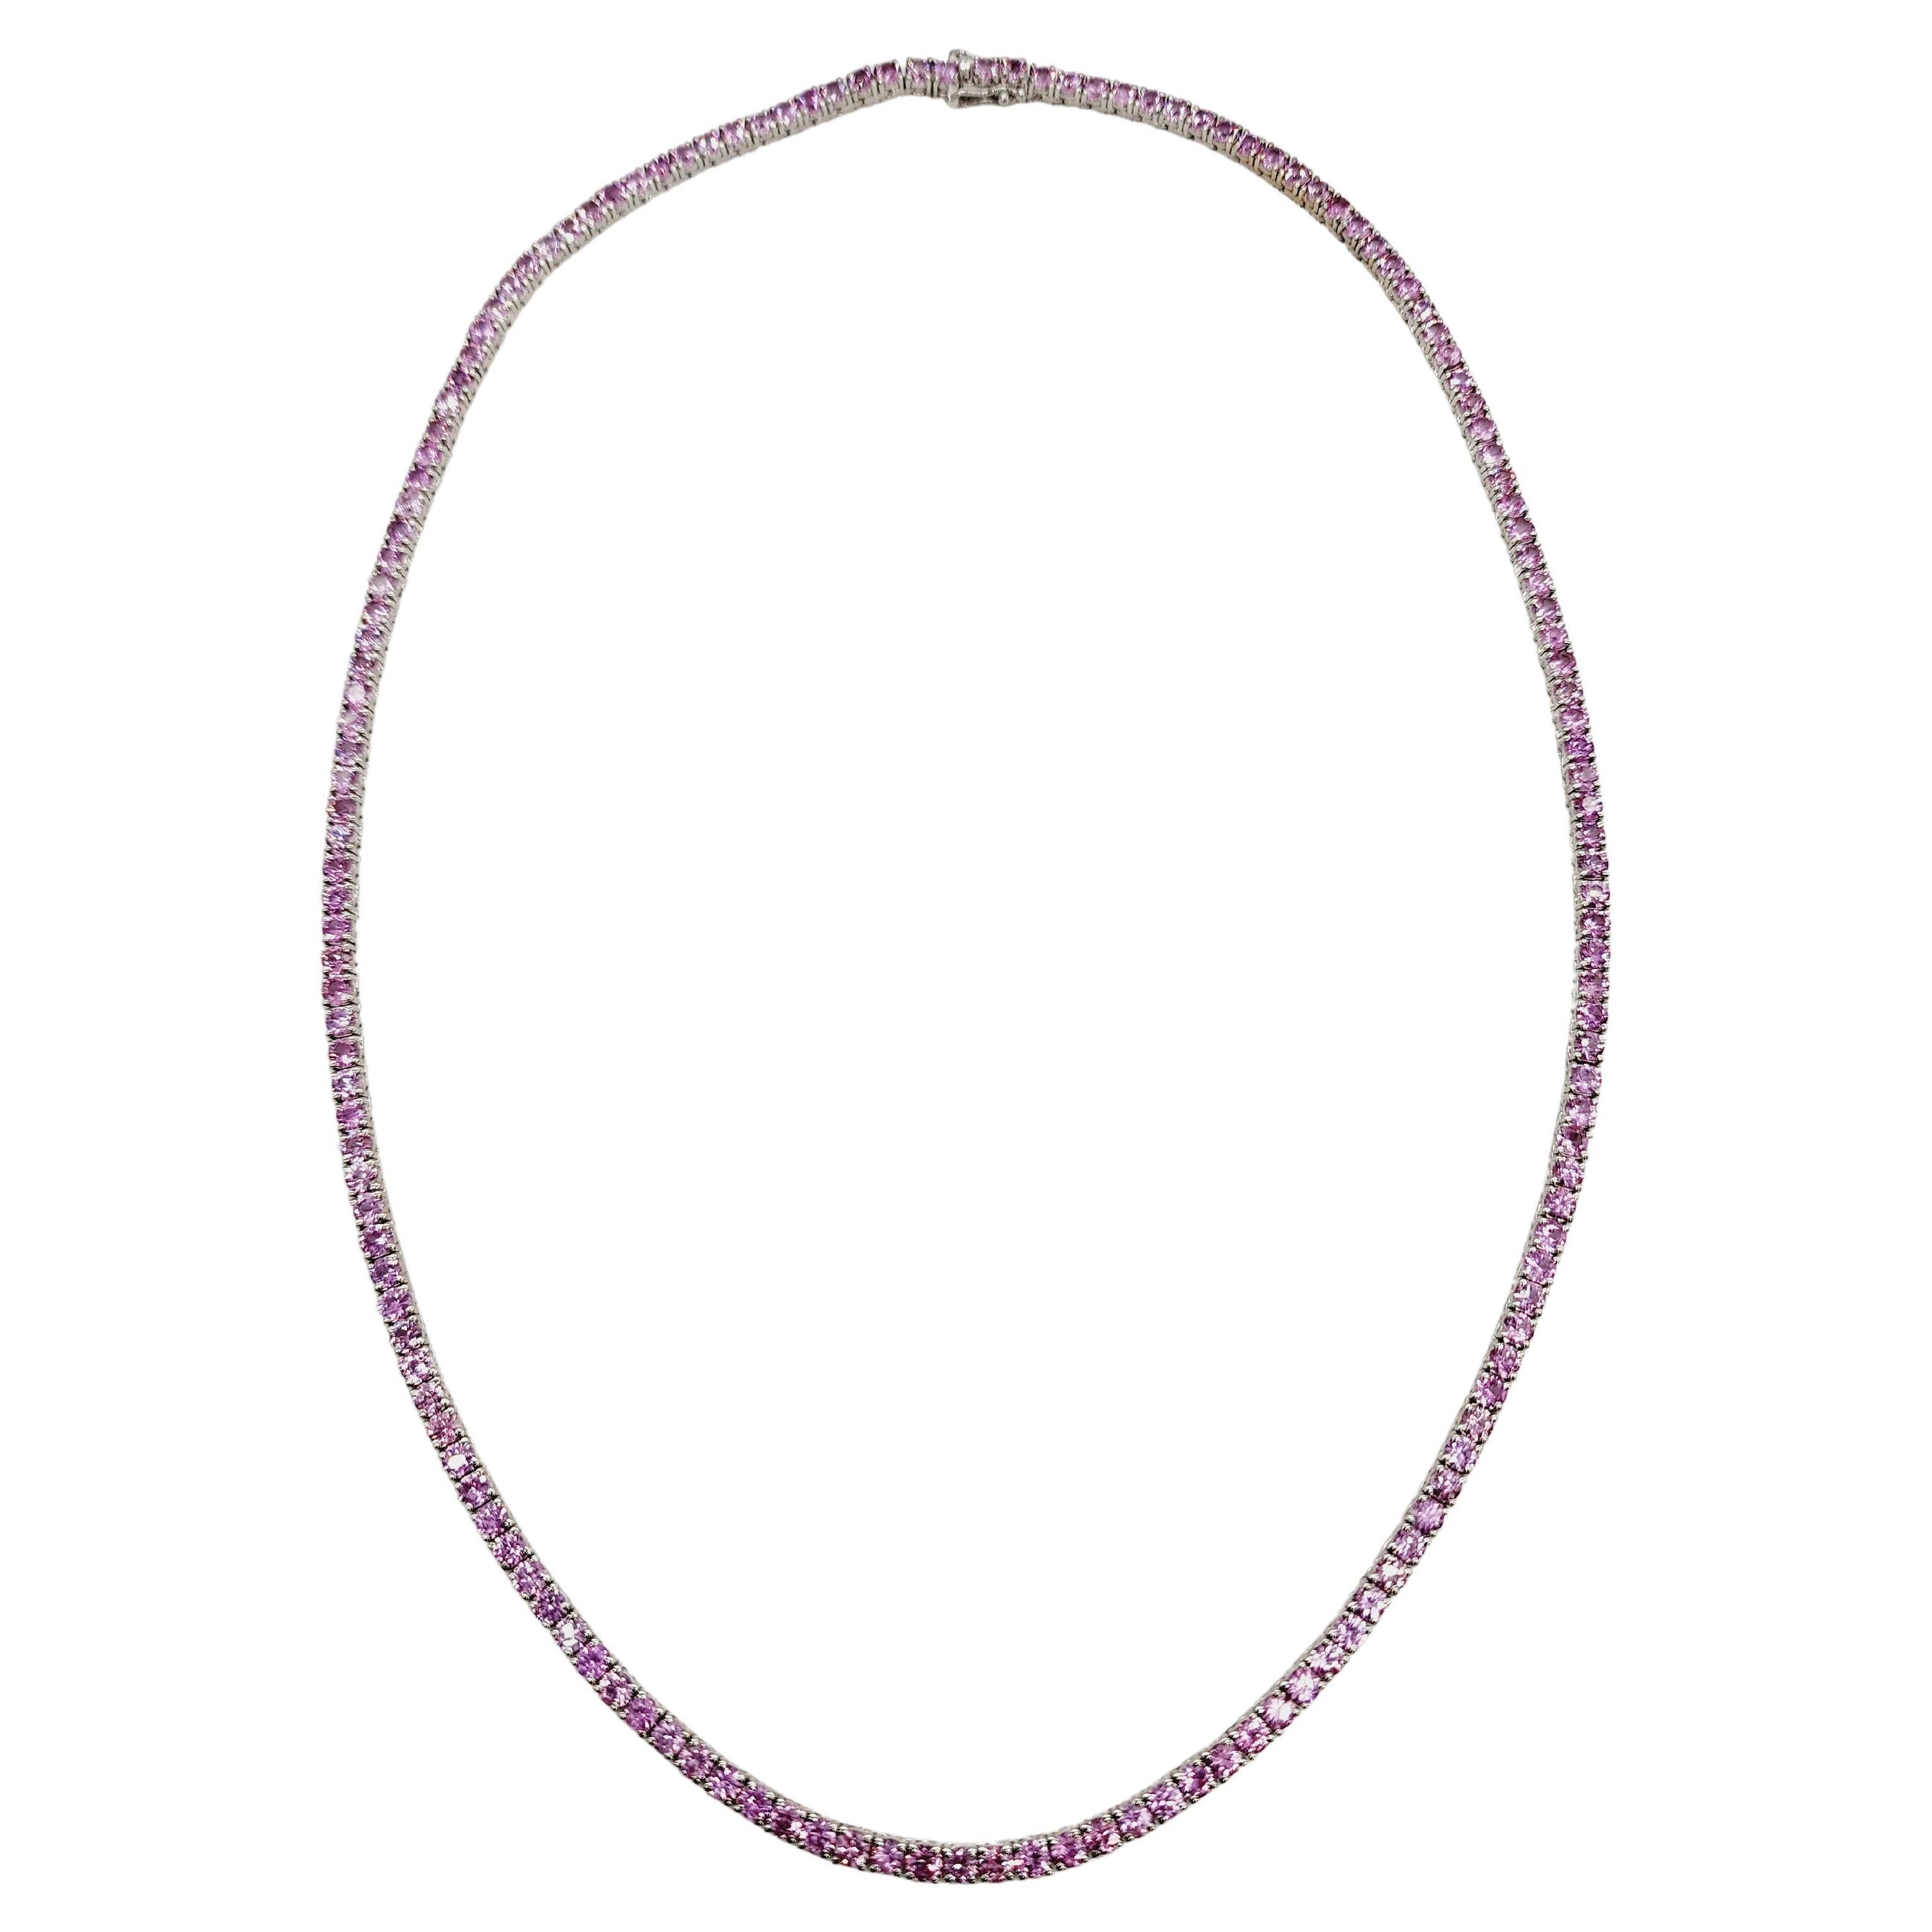 16.80 Carats Pink Sapphire Tennis Necklace 14 Karat White Gold 16''